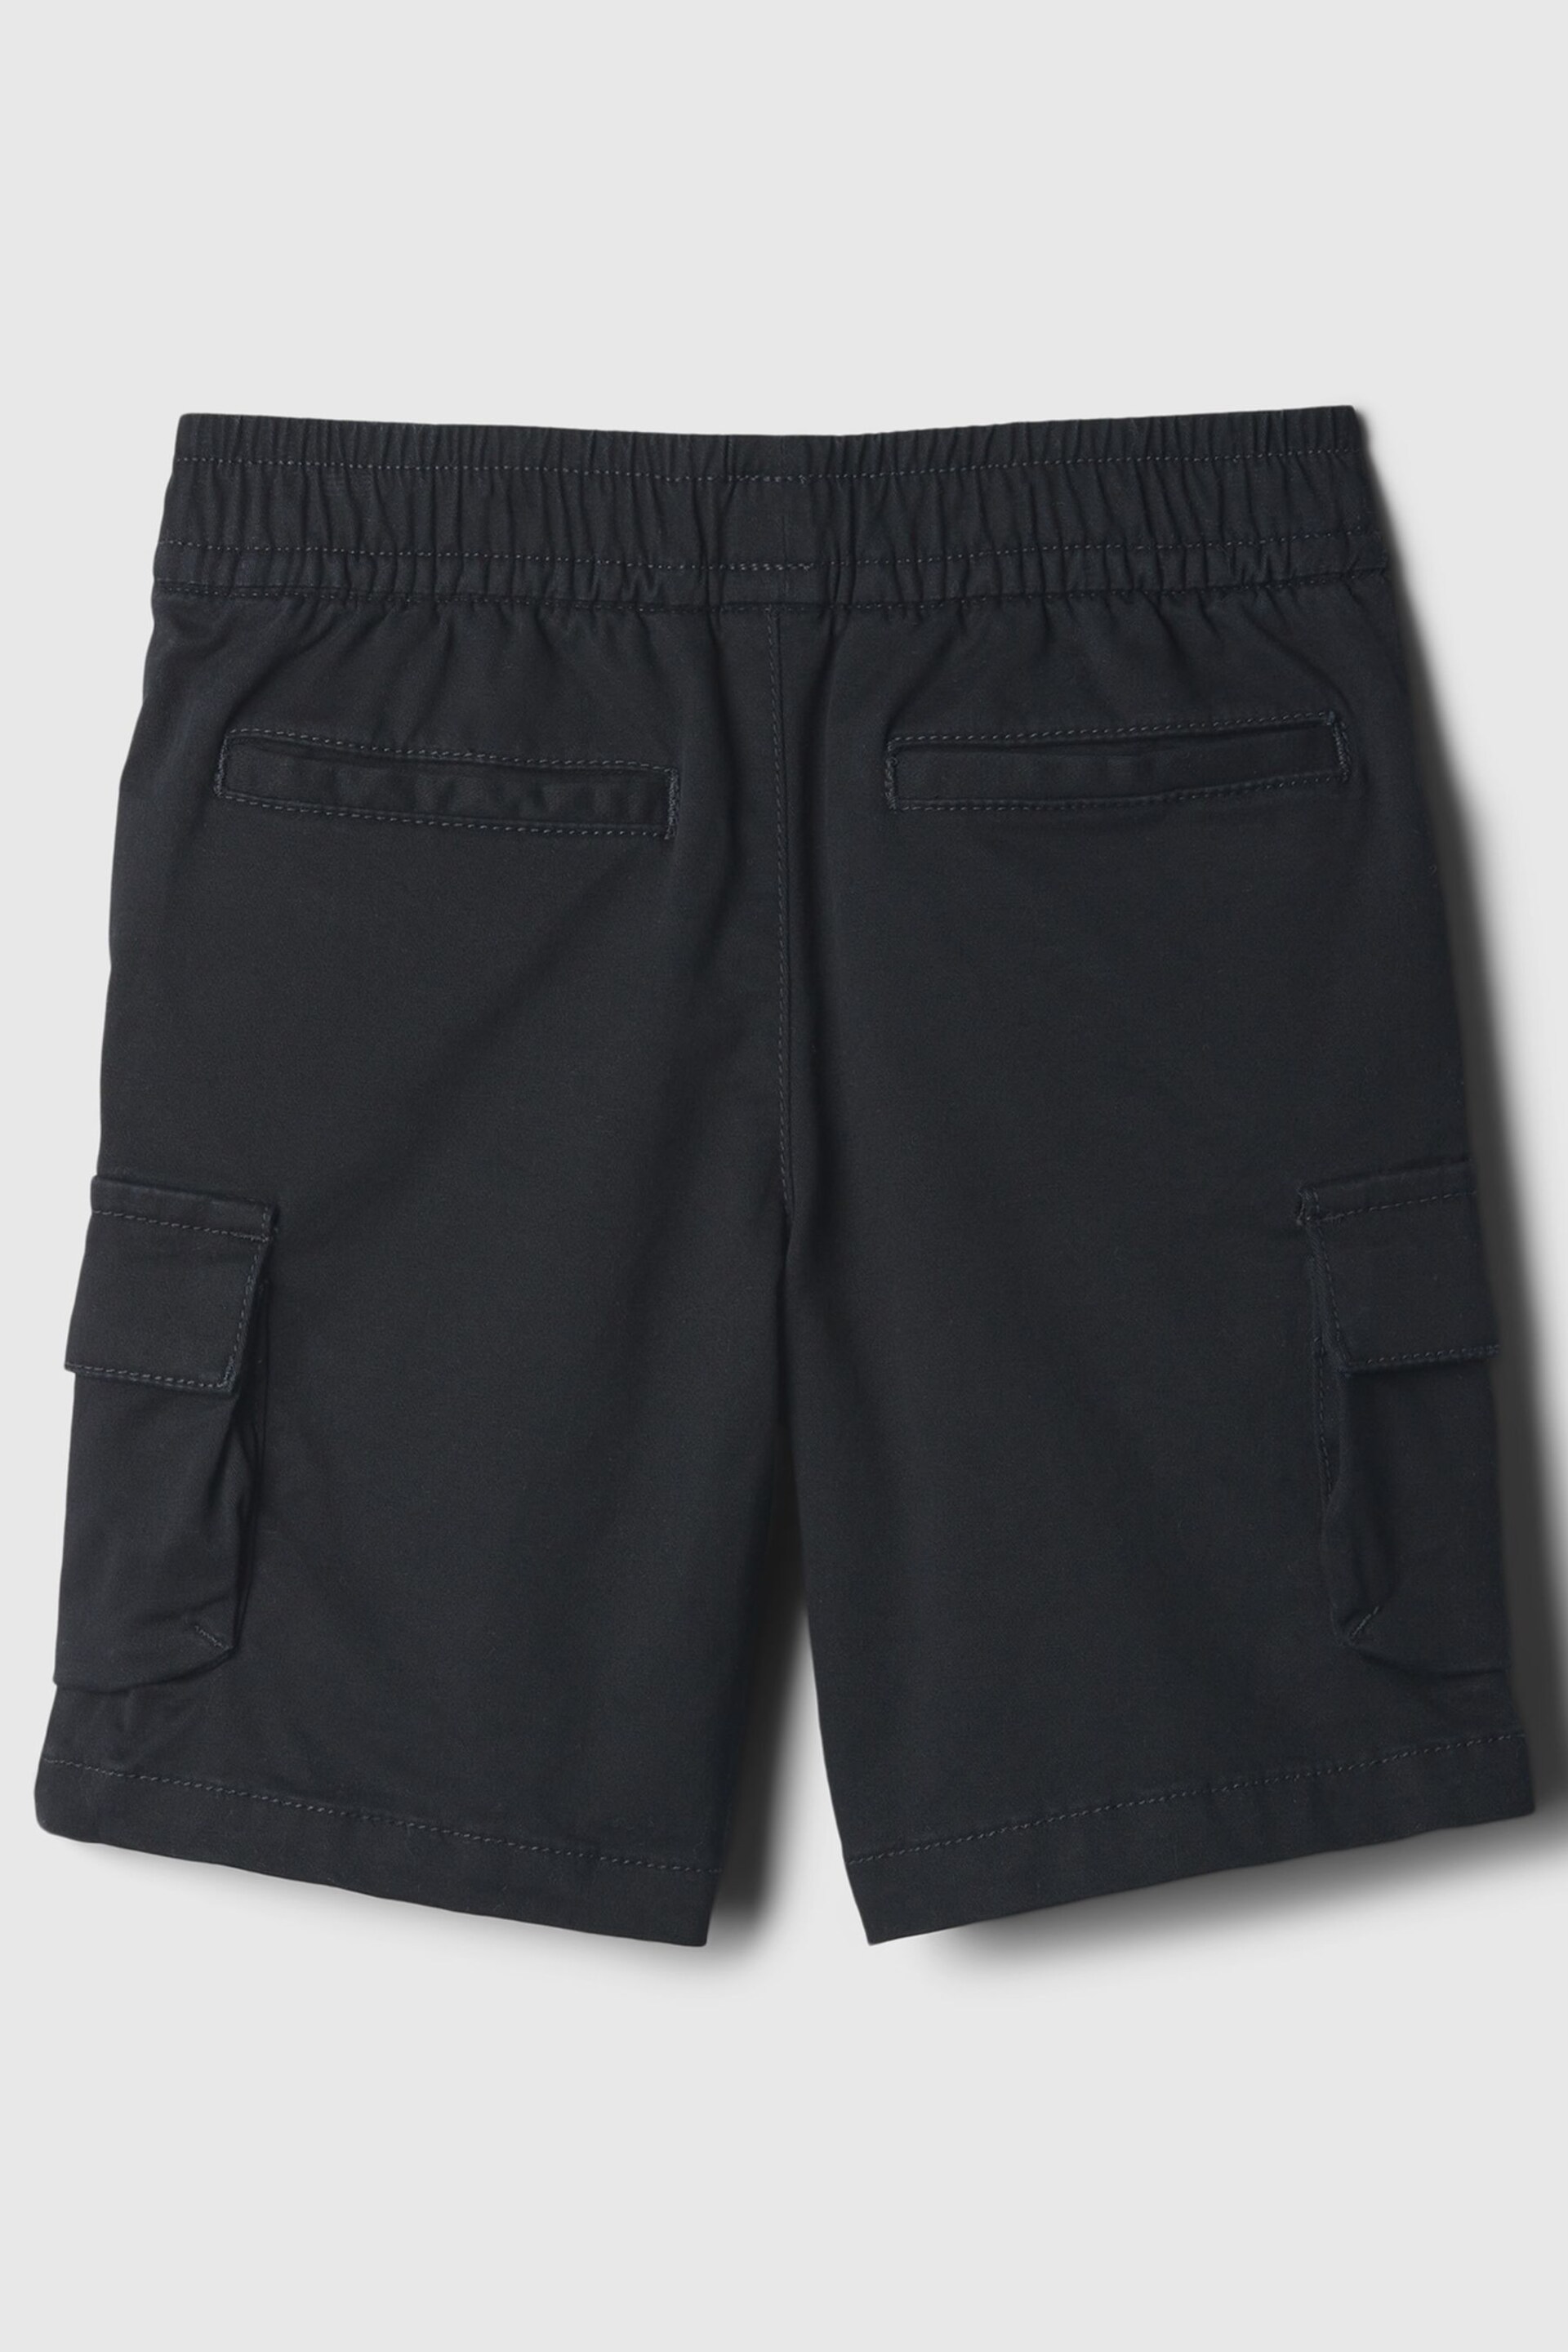 Gap Black Cotton Twill Pull On Cargo Shorts (6mths-5yrs) - Image 2 of 2